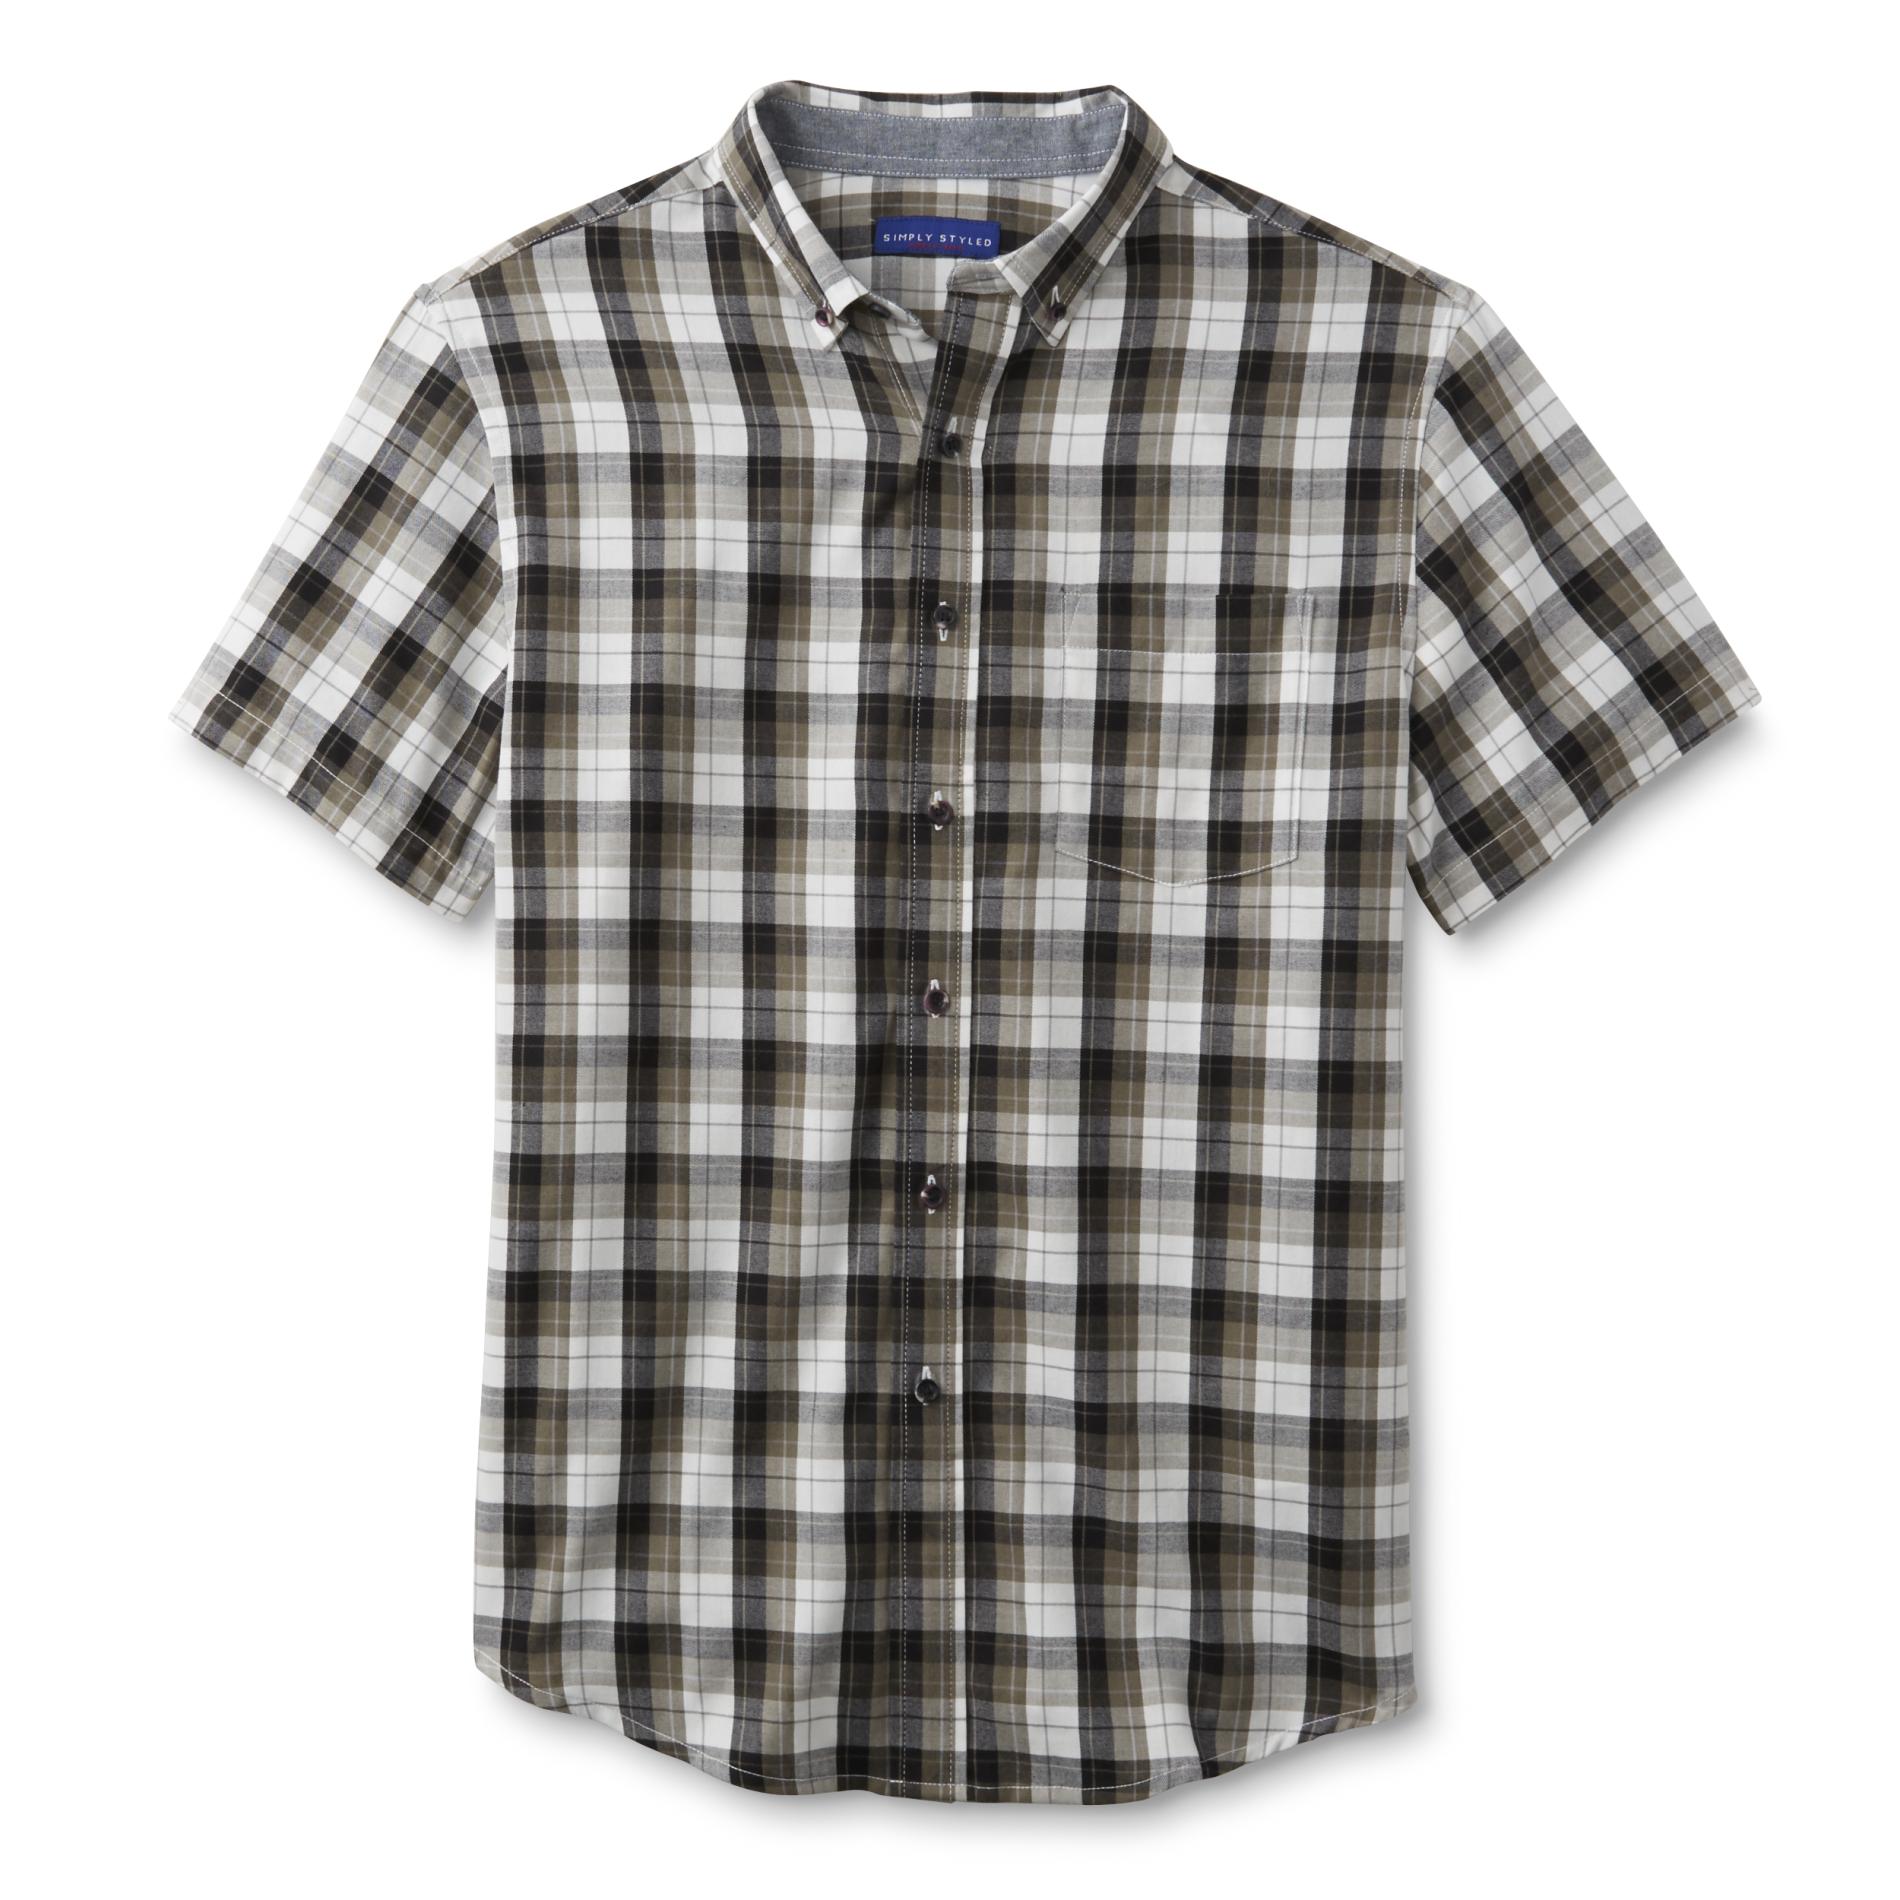 Simply Styled Men's Short-Sleeve Shirt - Plaid